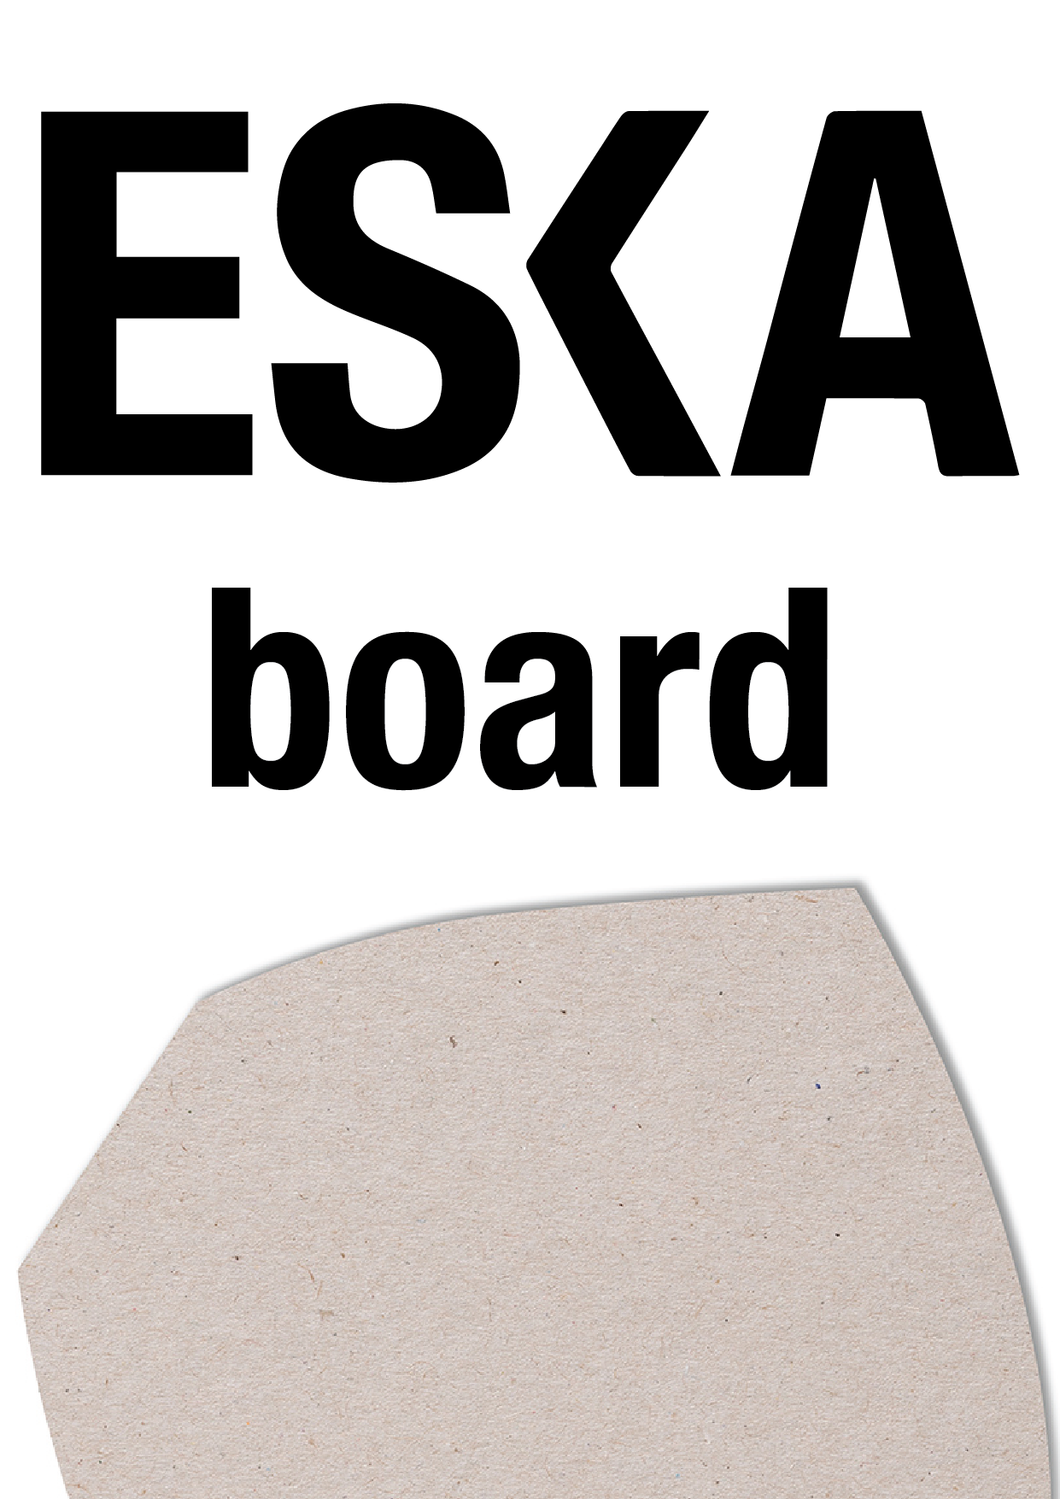 ESKA Board